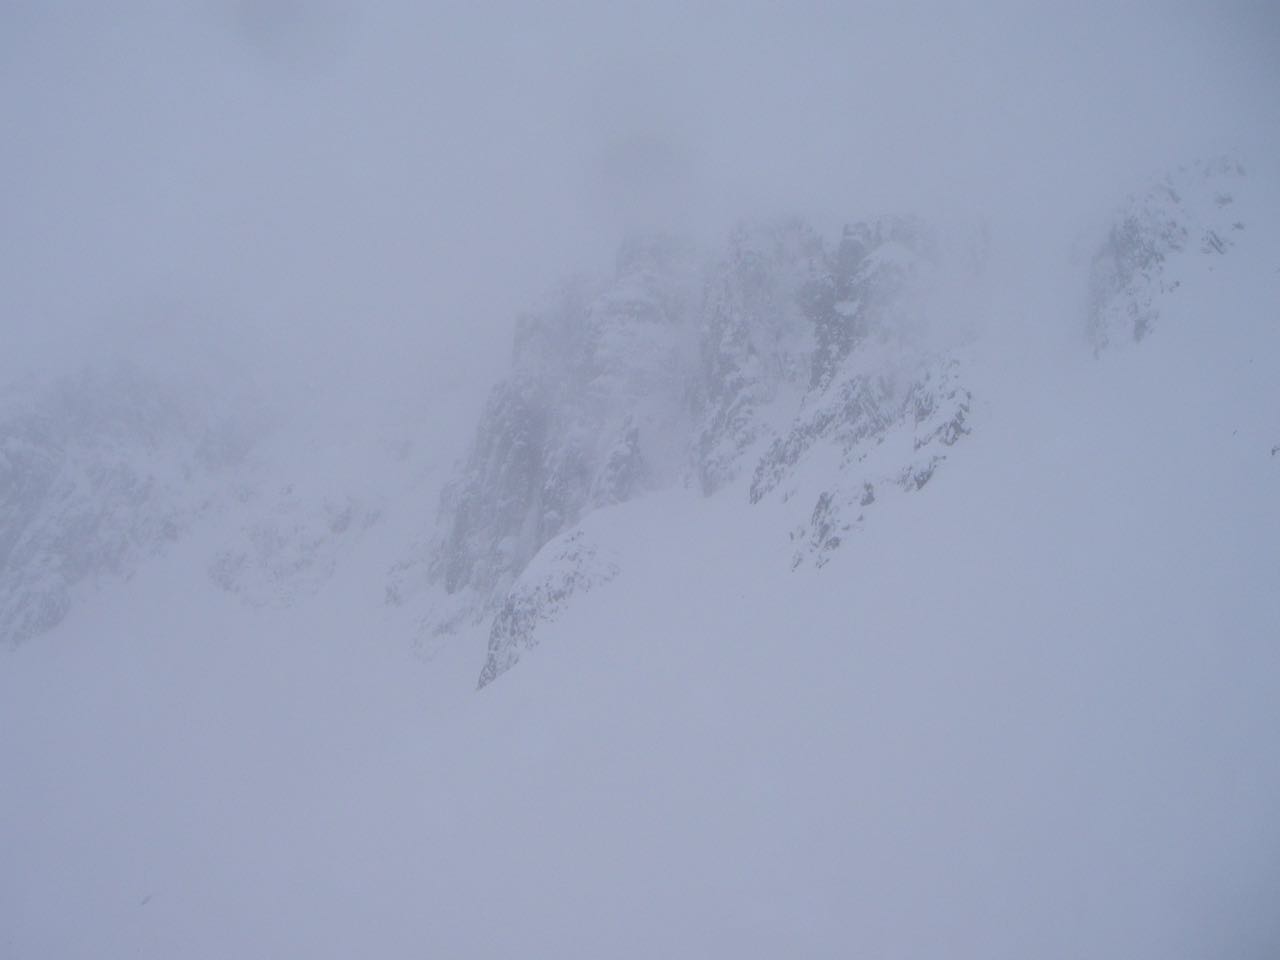 View across the Lochan cliffs showing snow laden faces